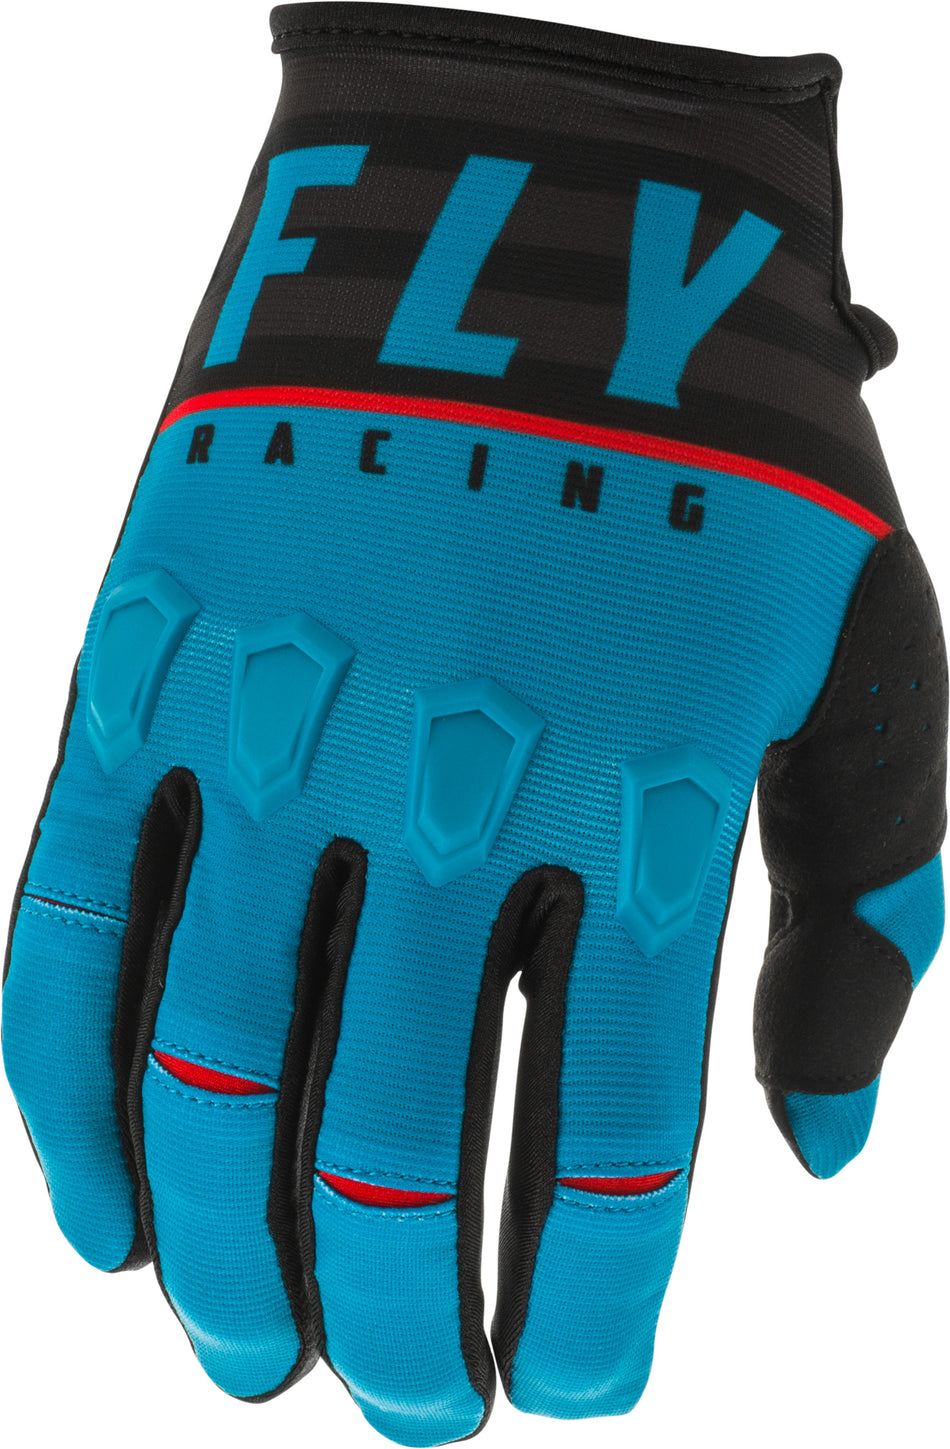 FLY RACING Kinetic K120 Gloves Blue/Black/Red Sz 10 373-41910